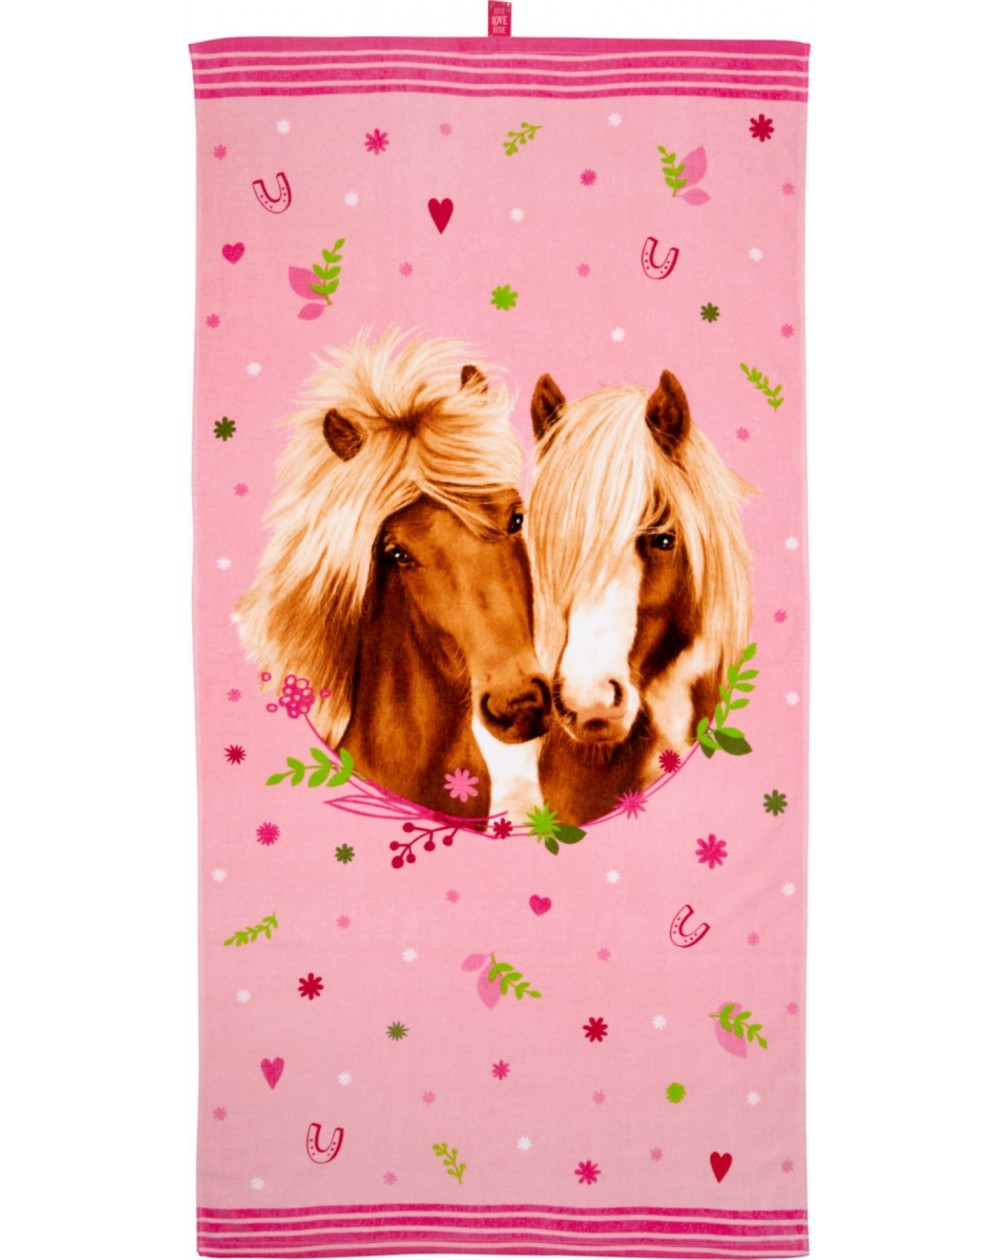 Magic horse towel 75 x 100cm